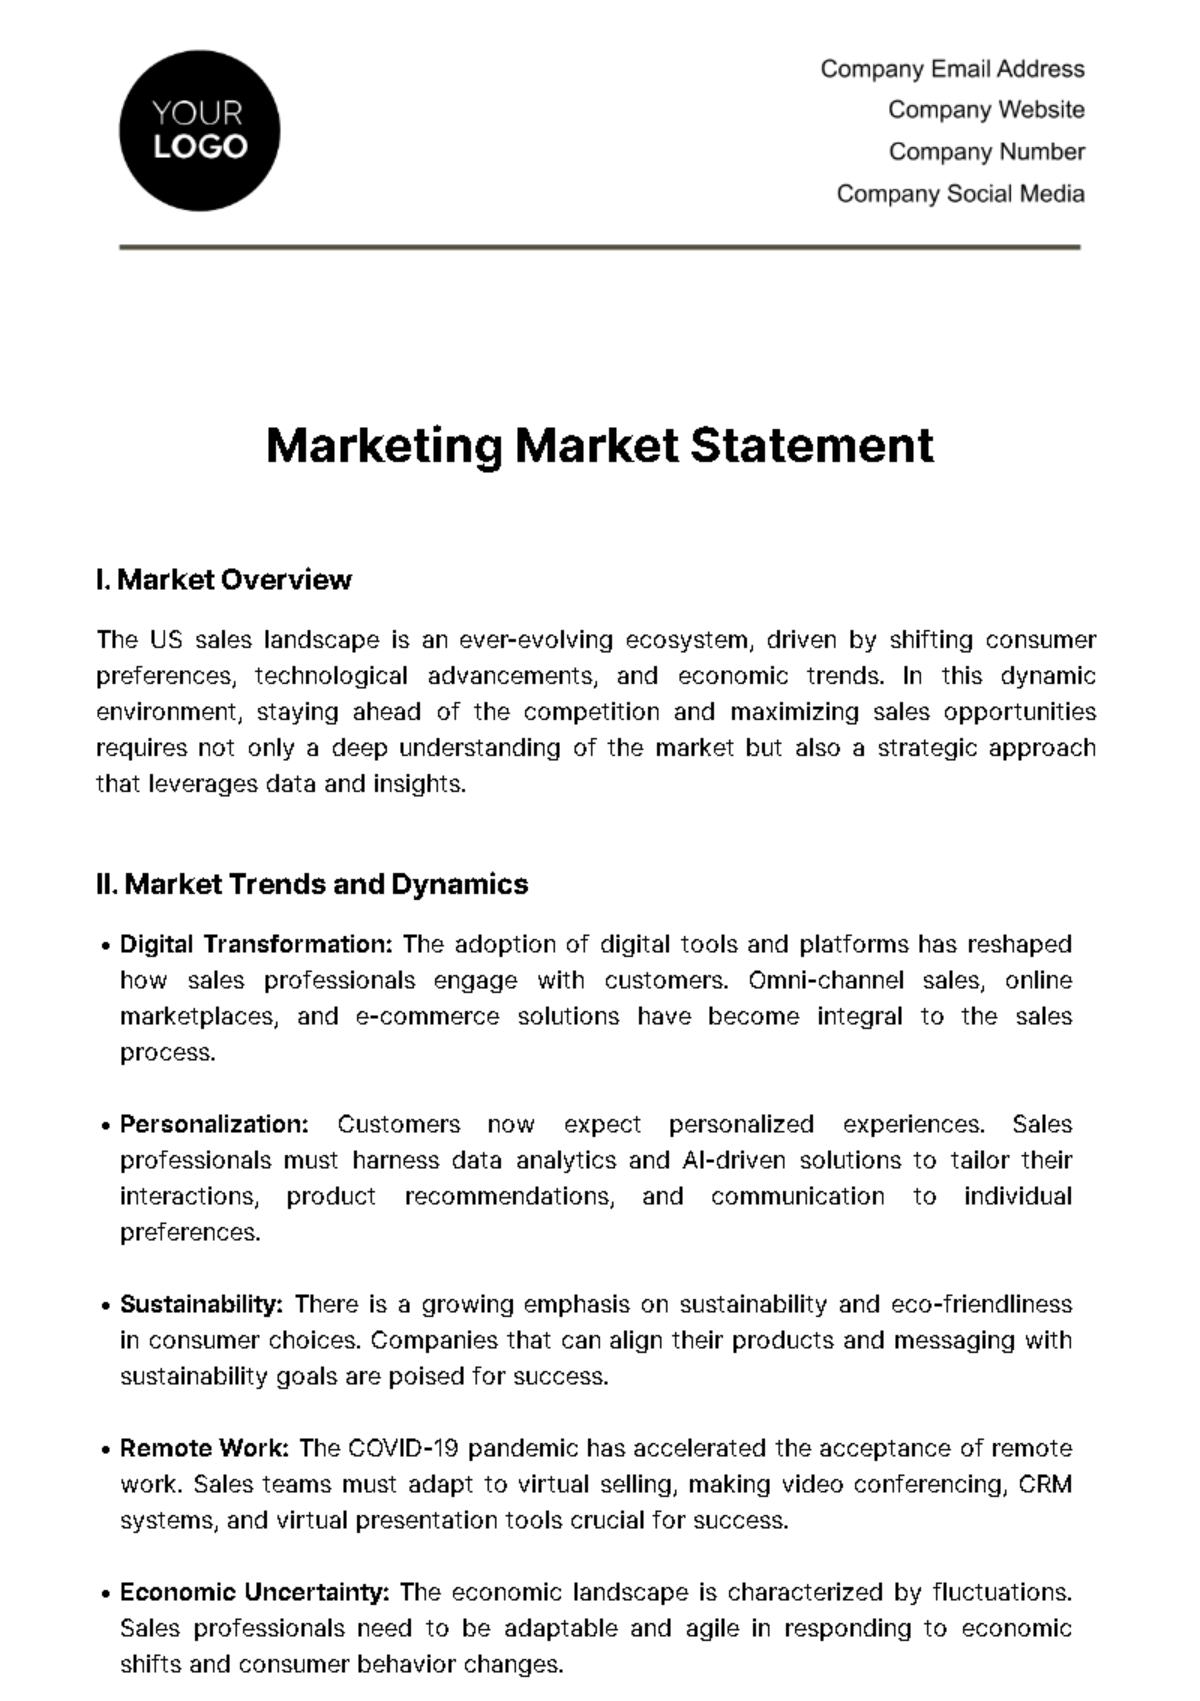 Free Marketing Market Statement Template